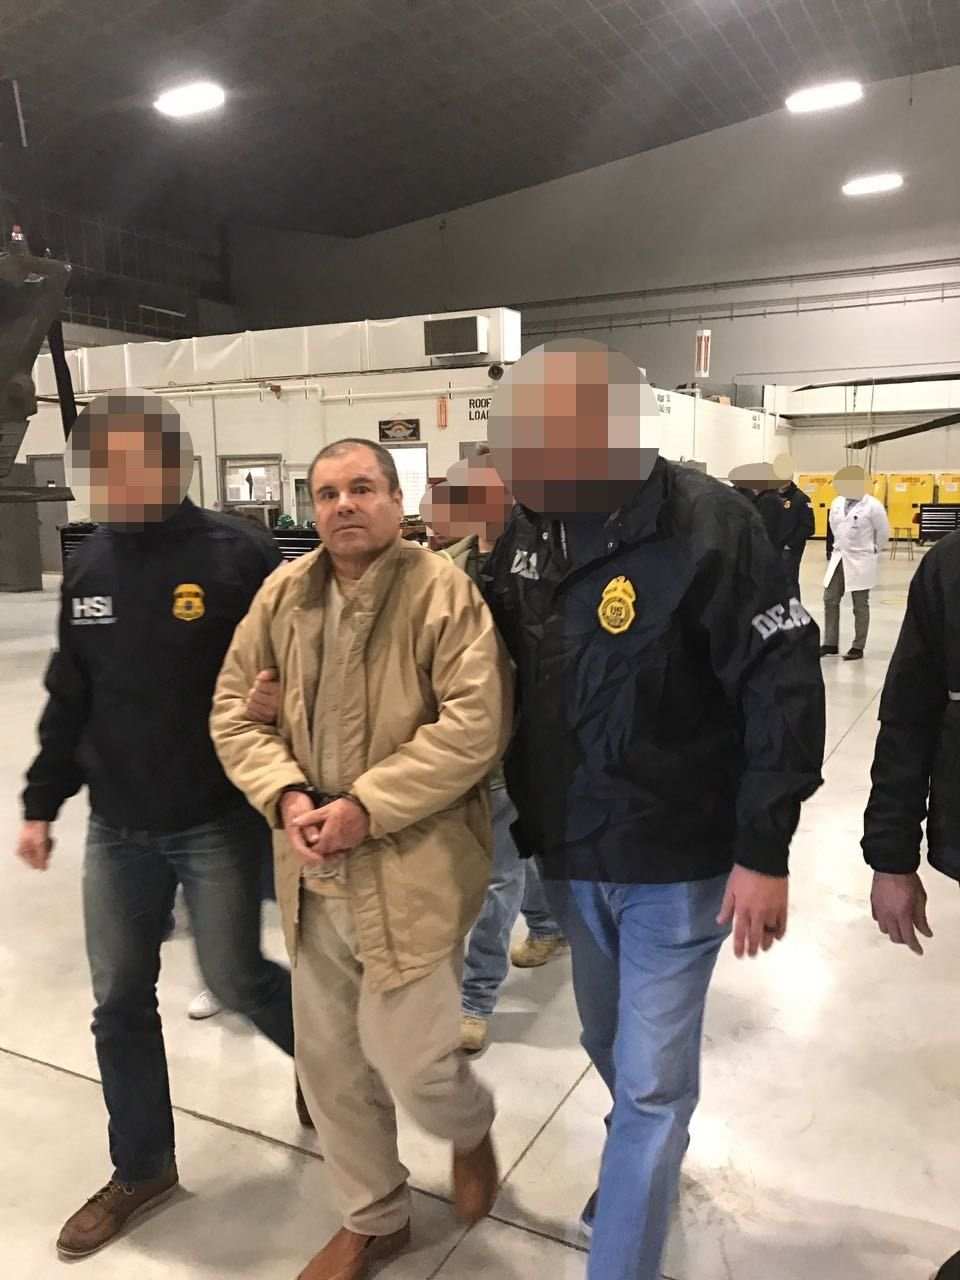 Extradit als EUA el narcotraficant 'El Chapo' Guzmán